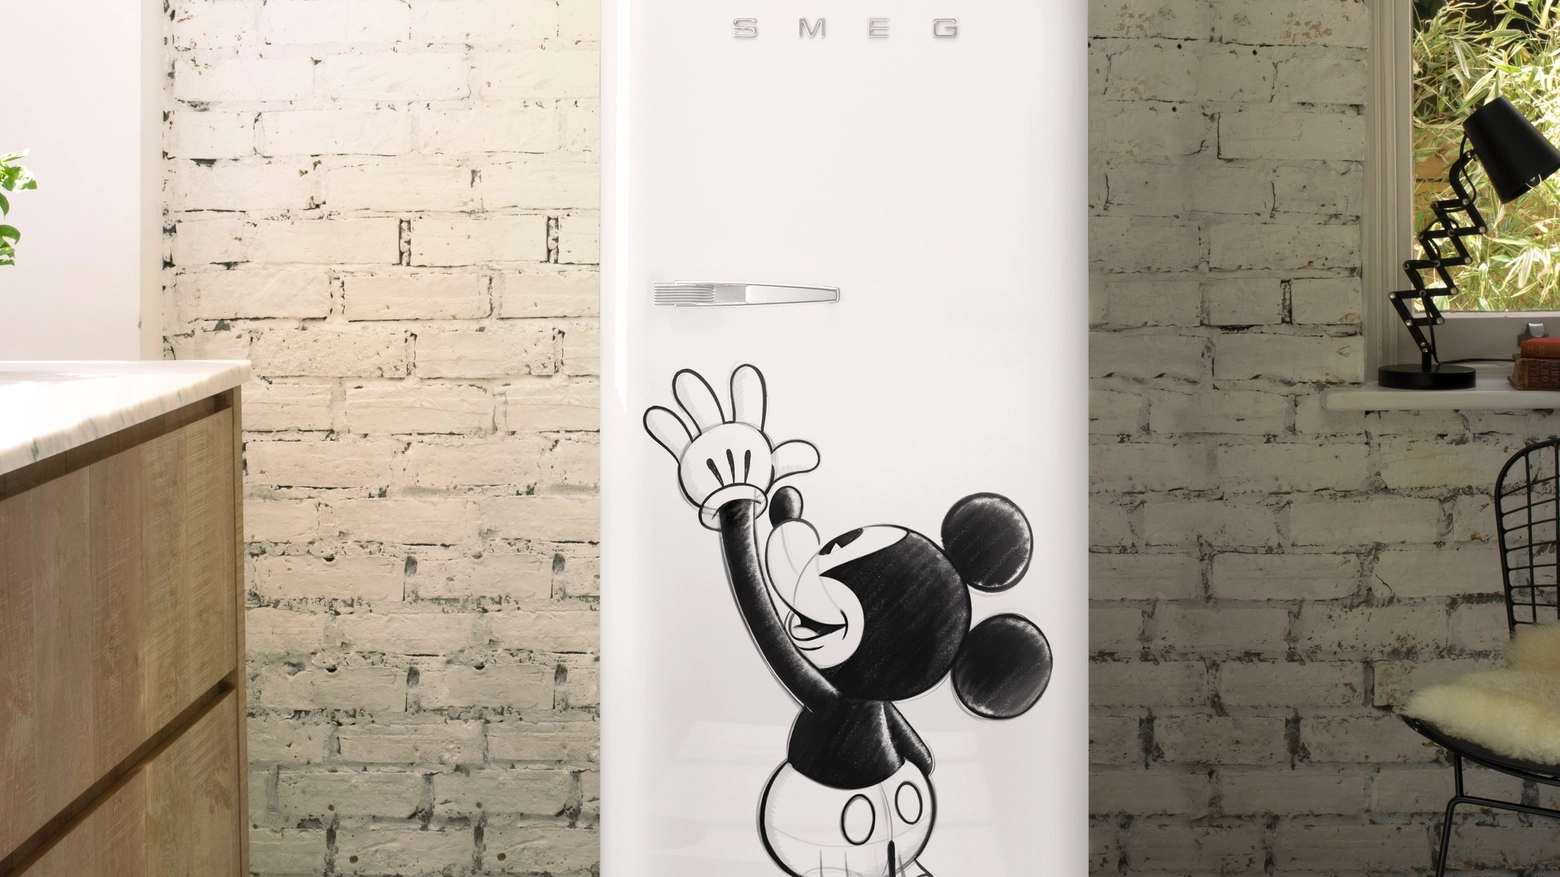 Il frigorifero della Smeg